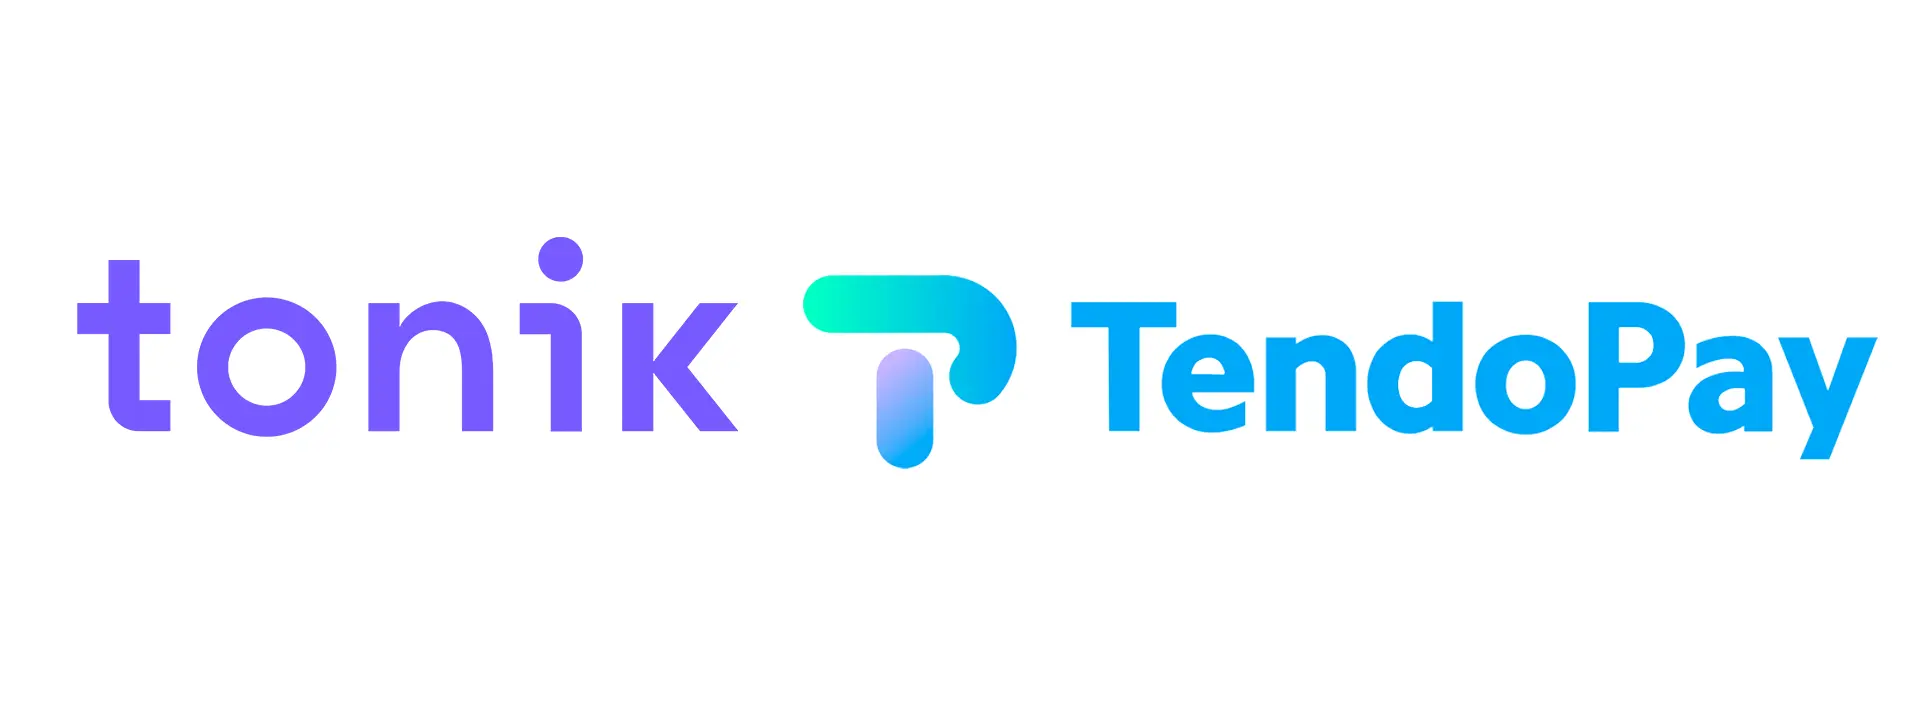 Tonik acquires TendoPay, enters employee benefits market